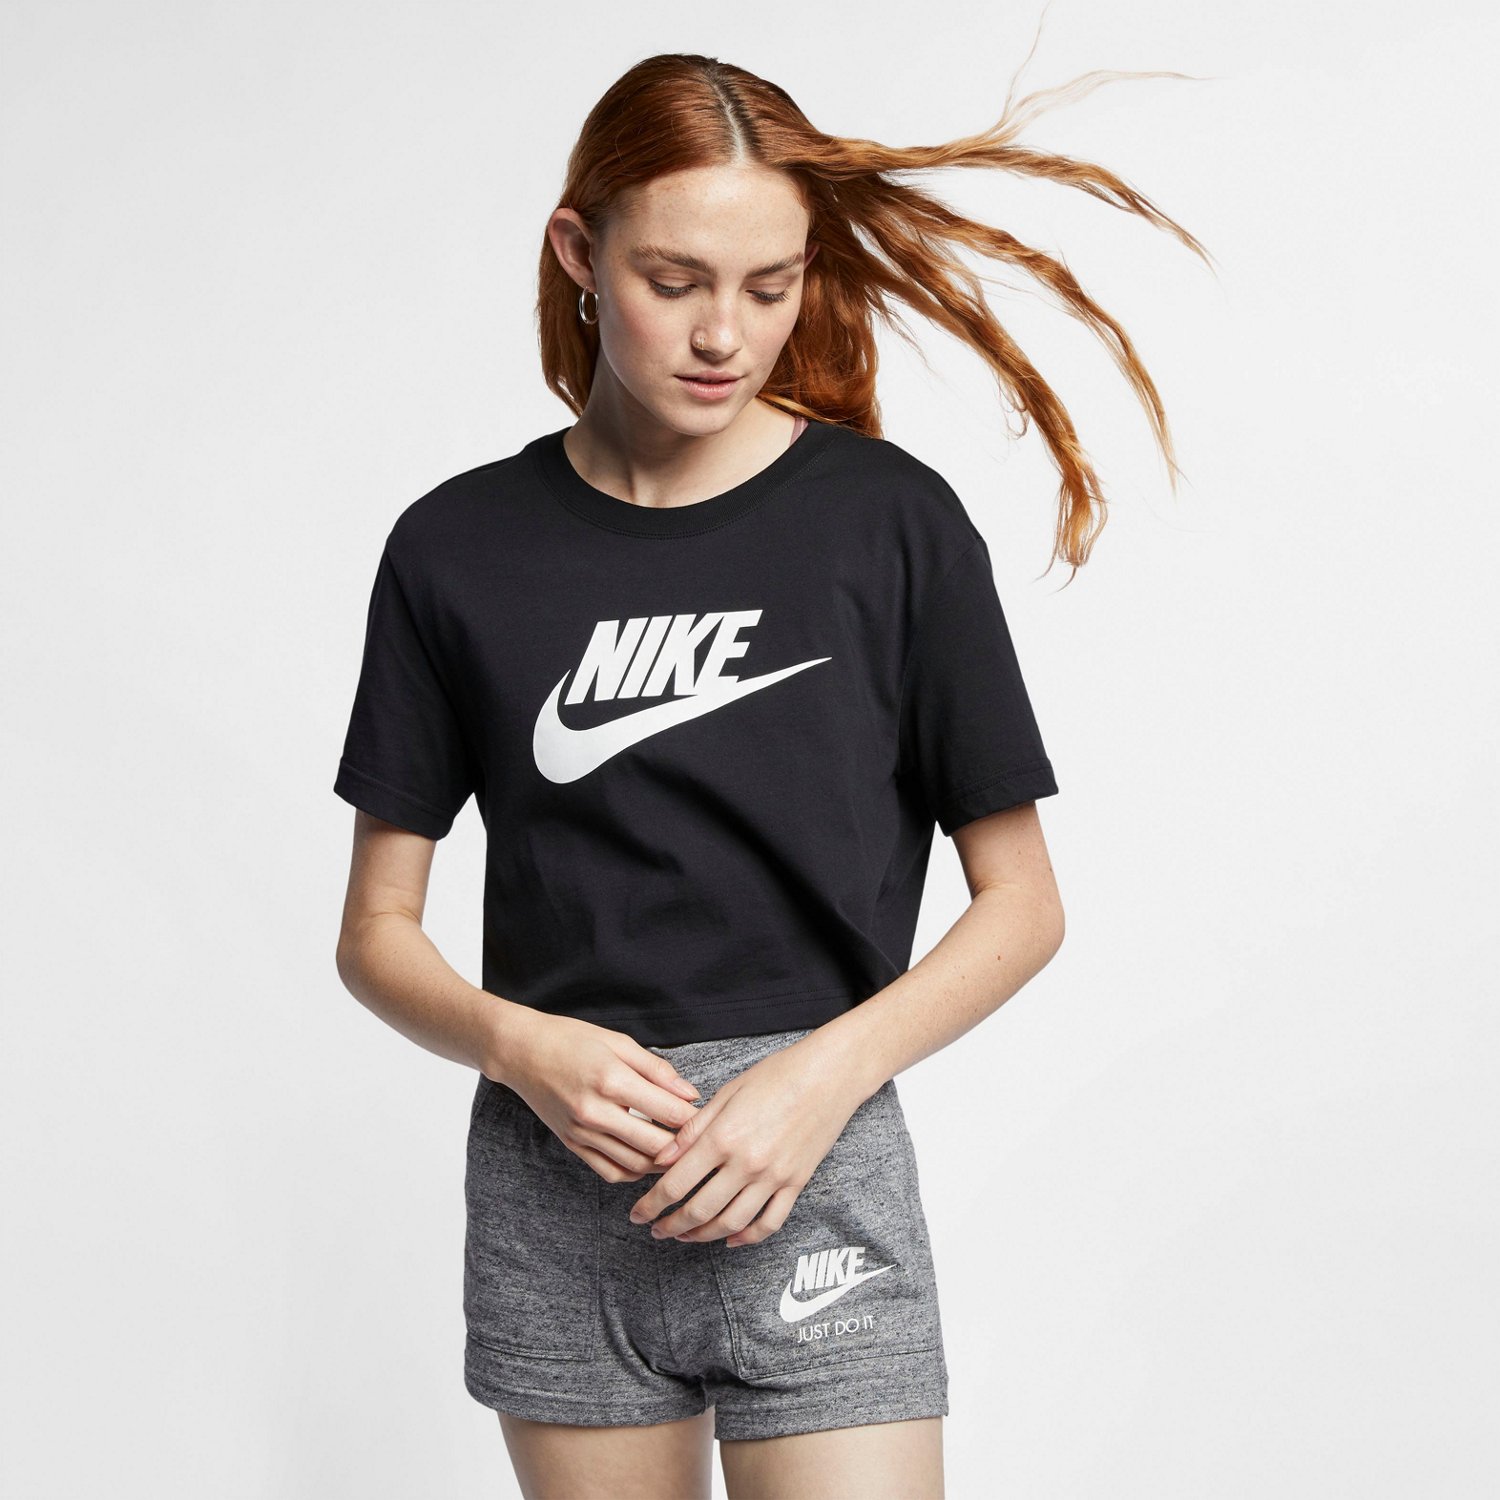 Women's Nike Clothing